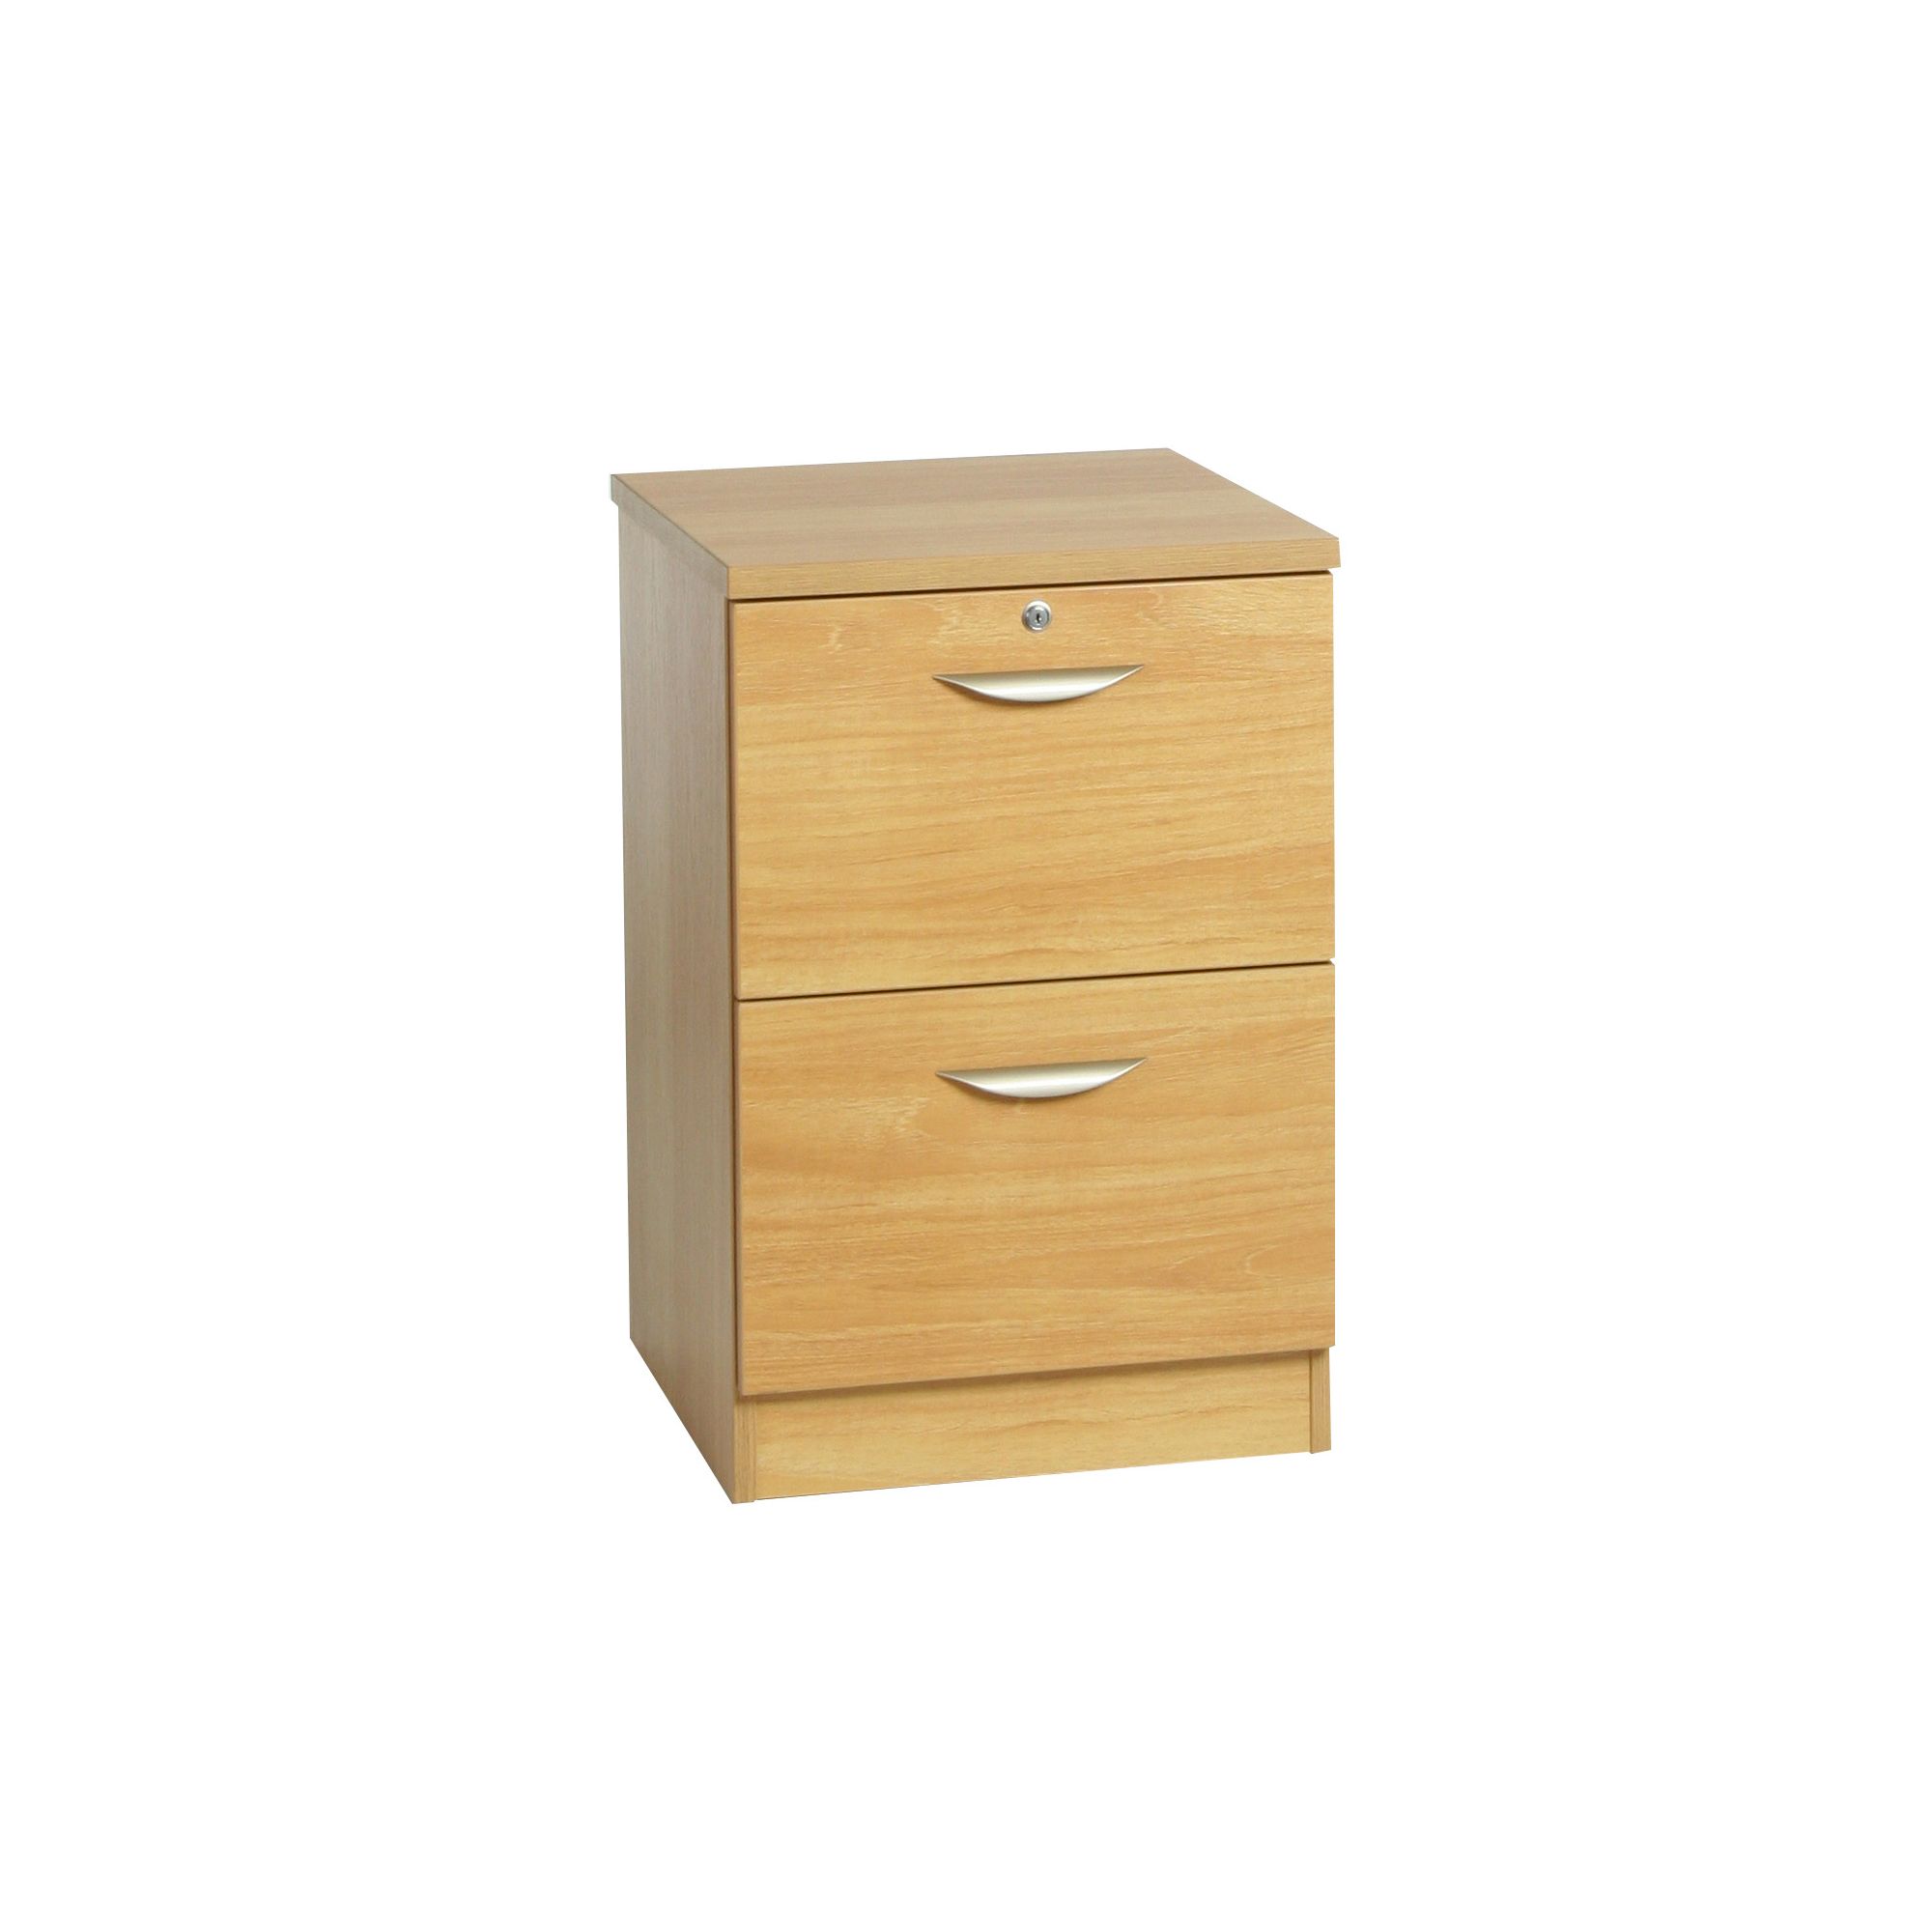 Enduro Two Drawer Wooden Filing Cabinet - Warm Oak at Tesco Direct